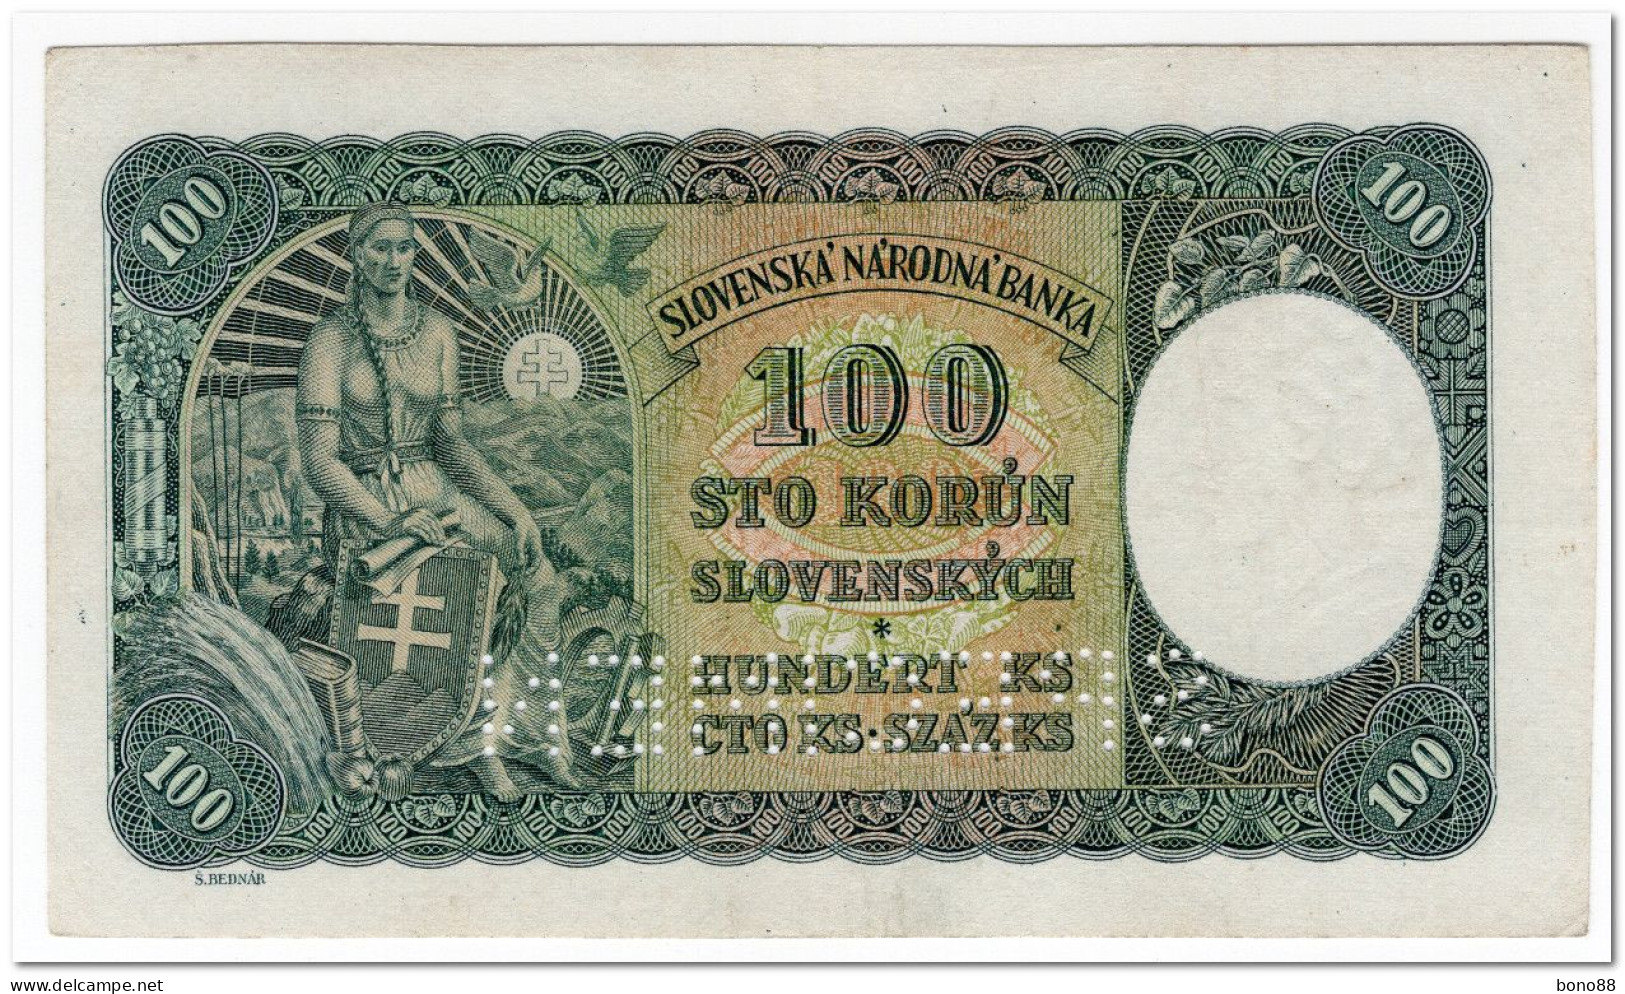 SLOVAKIA,100 KORUN,1940,P.10,AU,SPECIMEN,PERFORATED - Slowakei